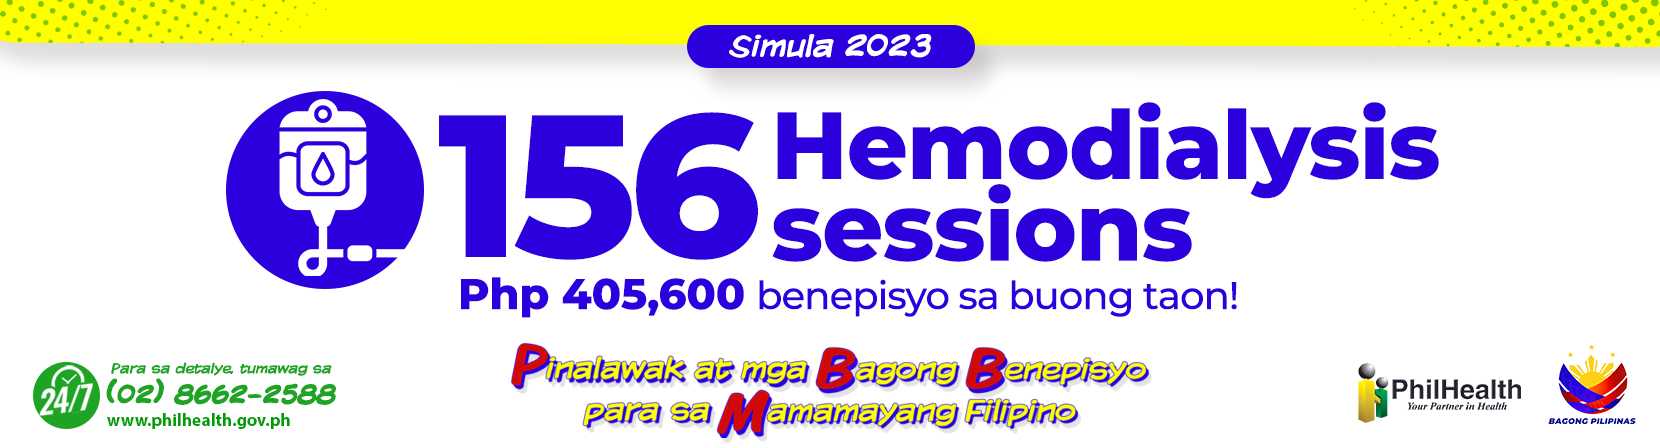 Simula 2023 - Hemodialysis